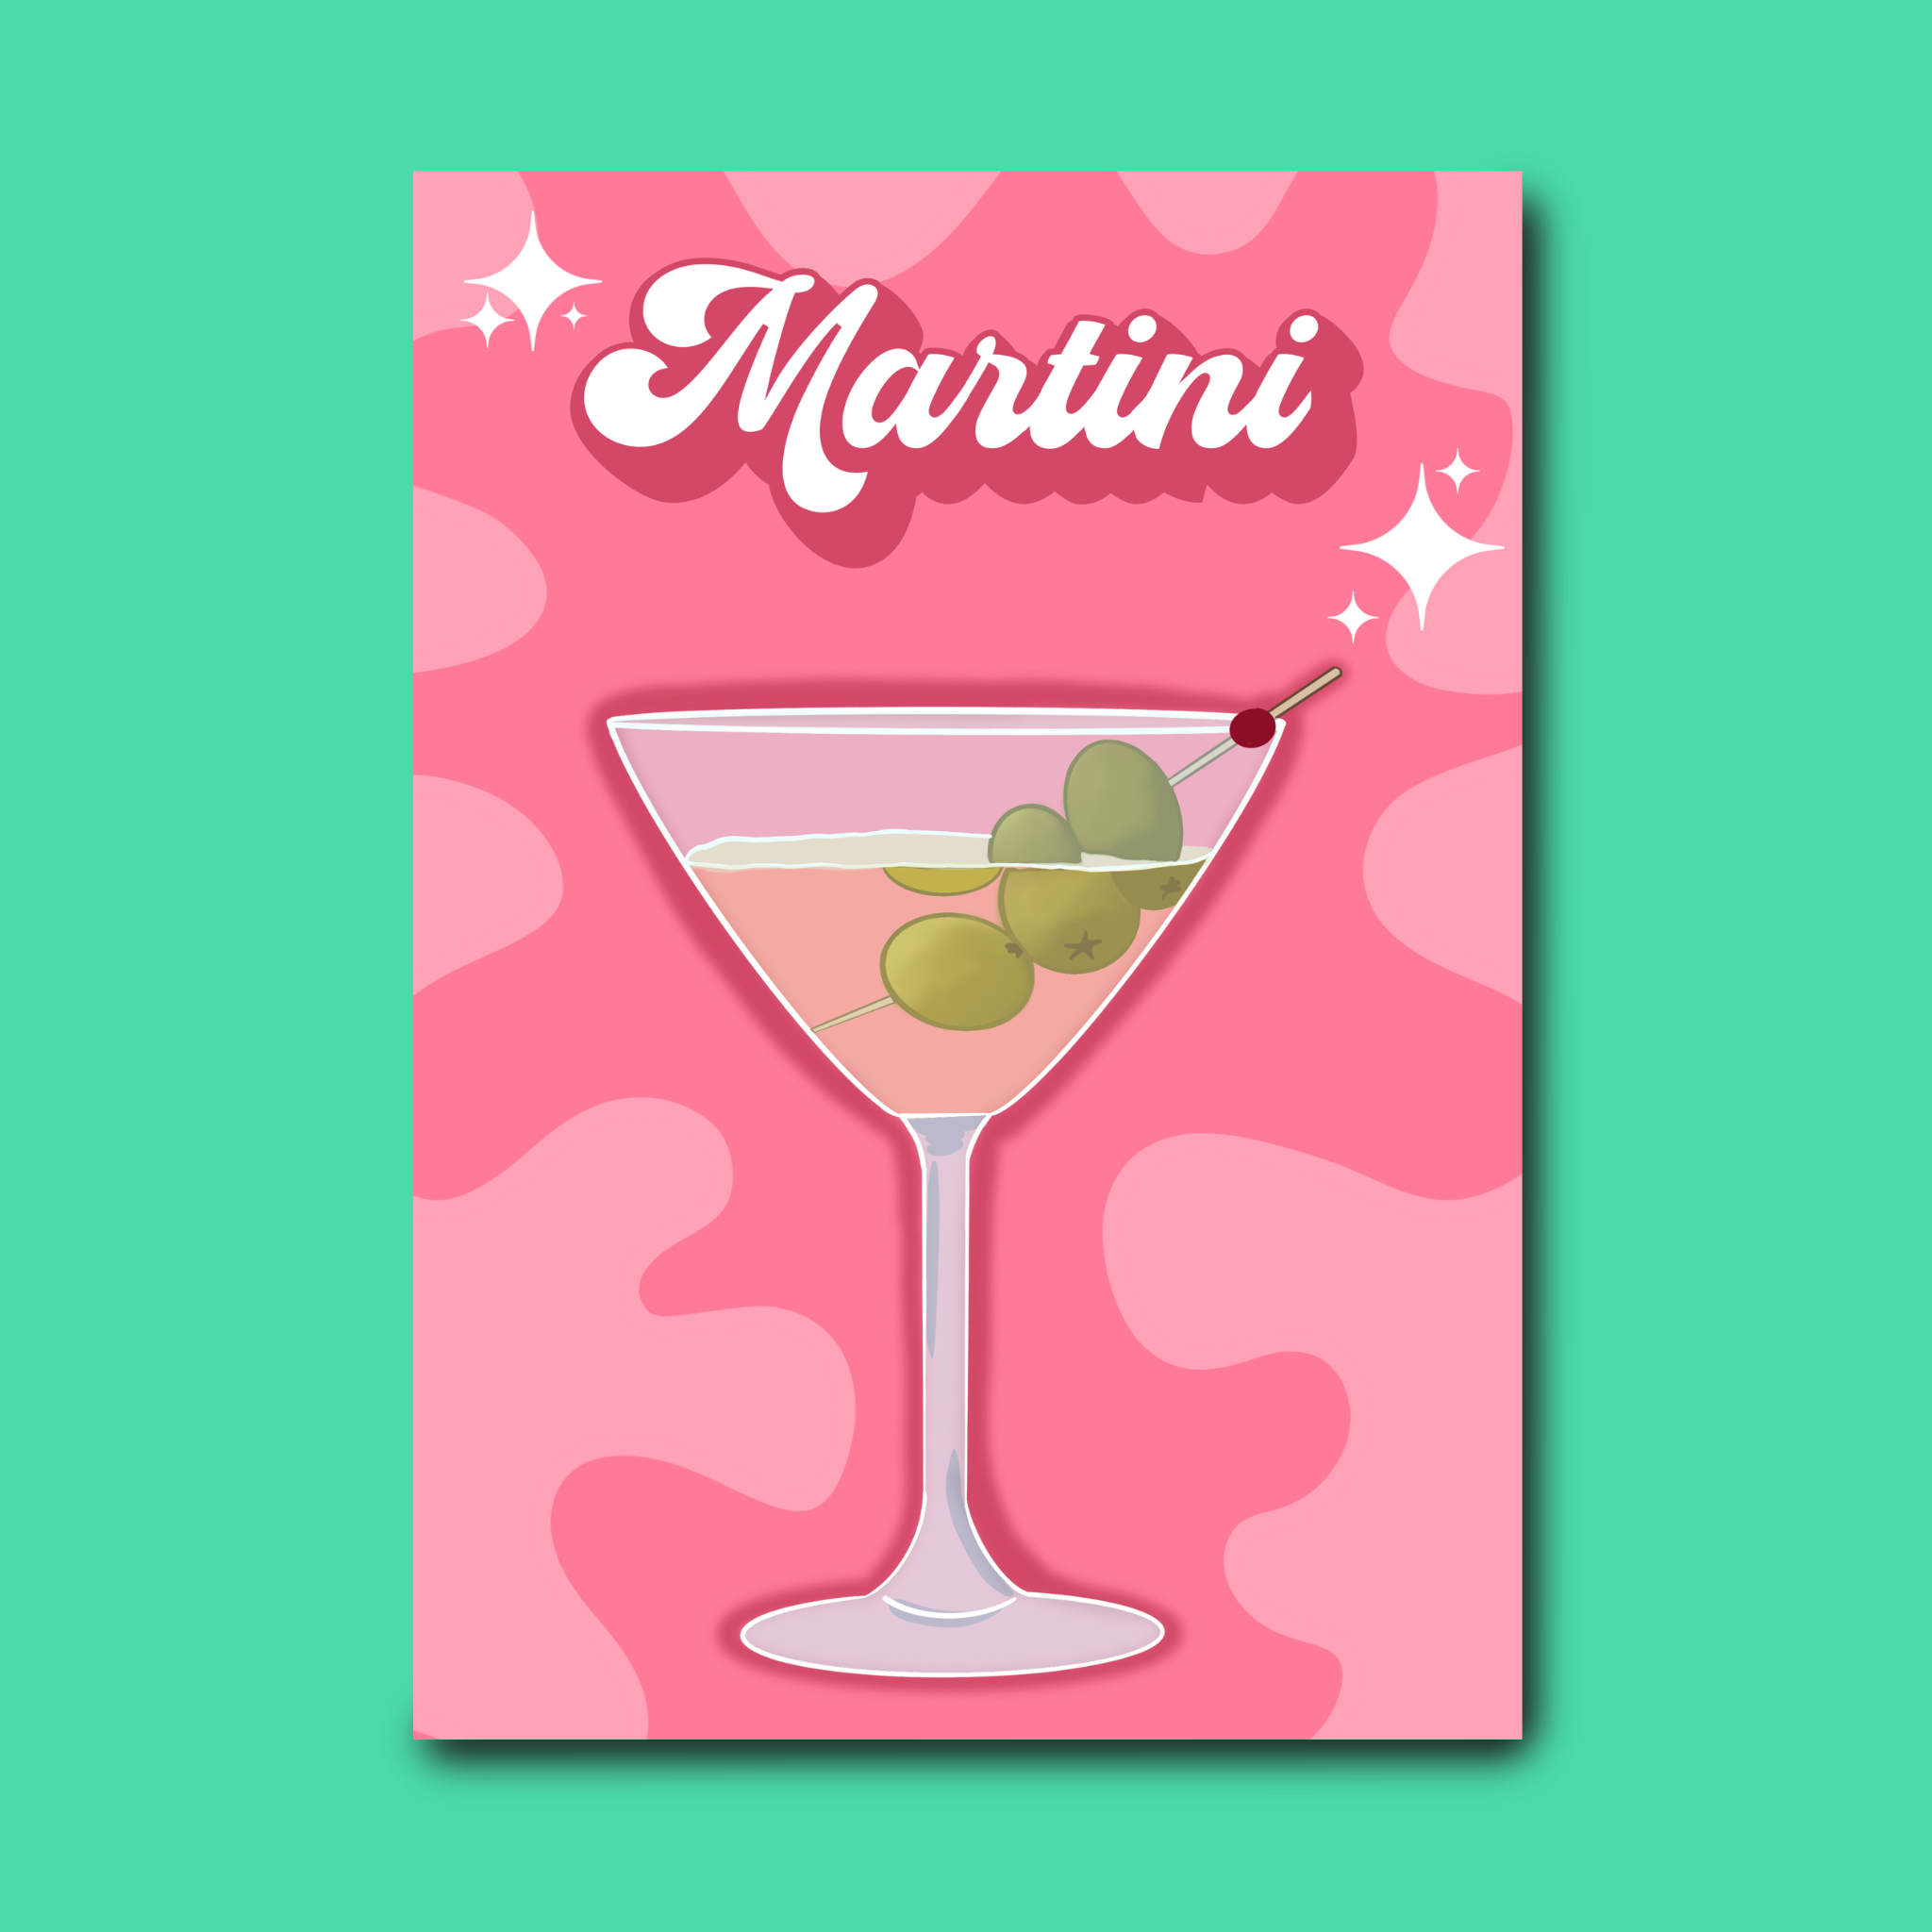 Martini Old stock